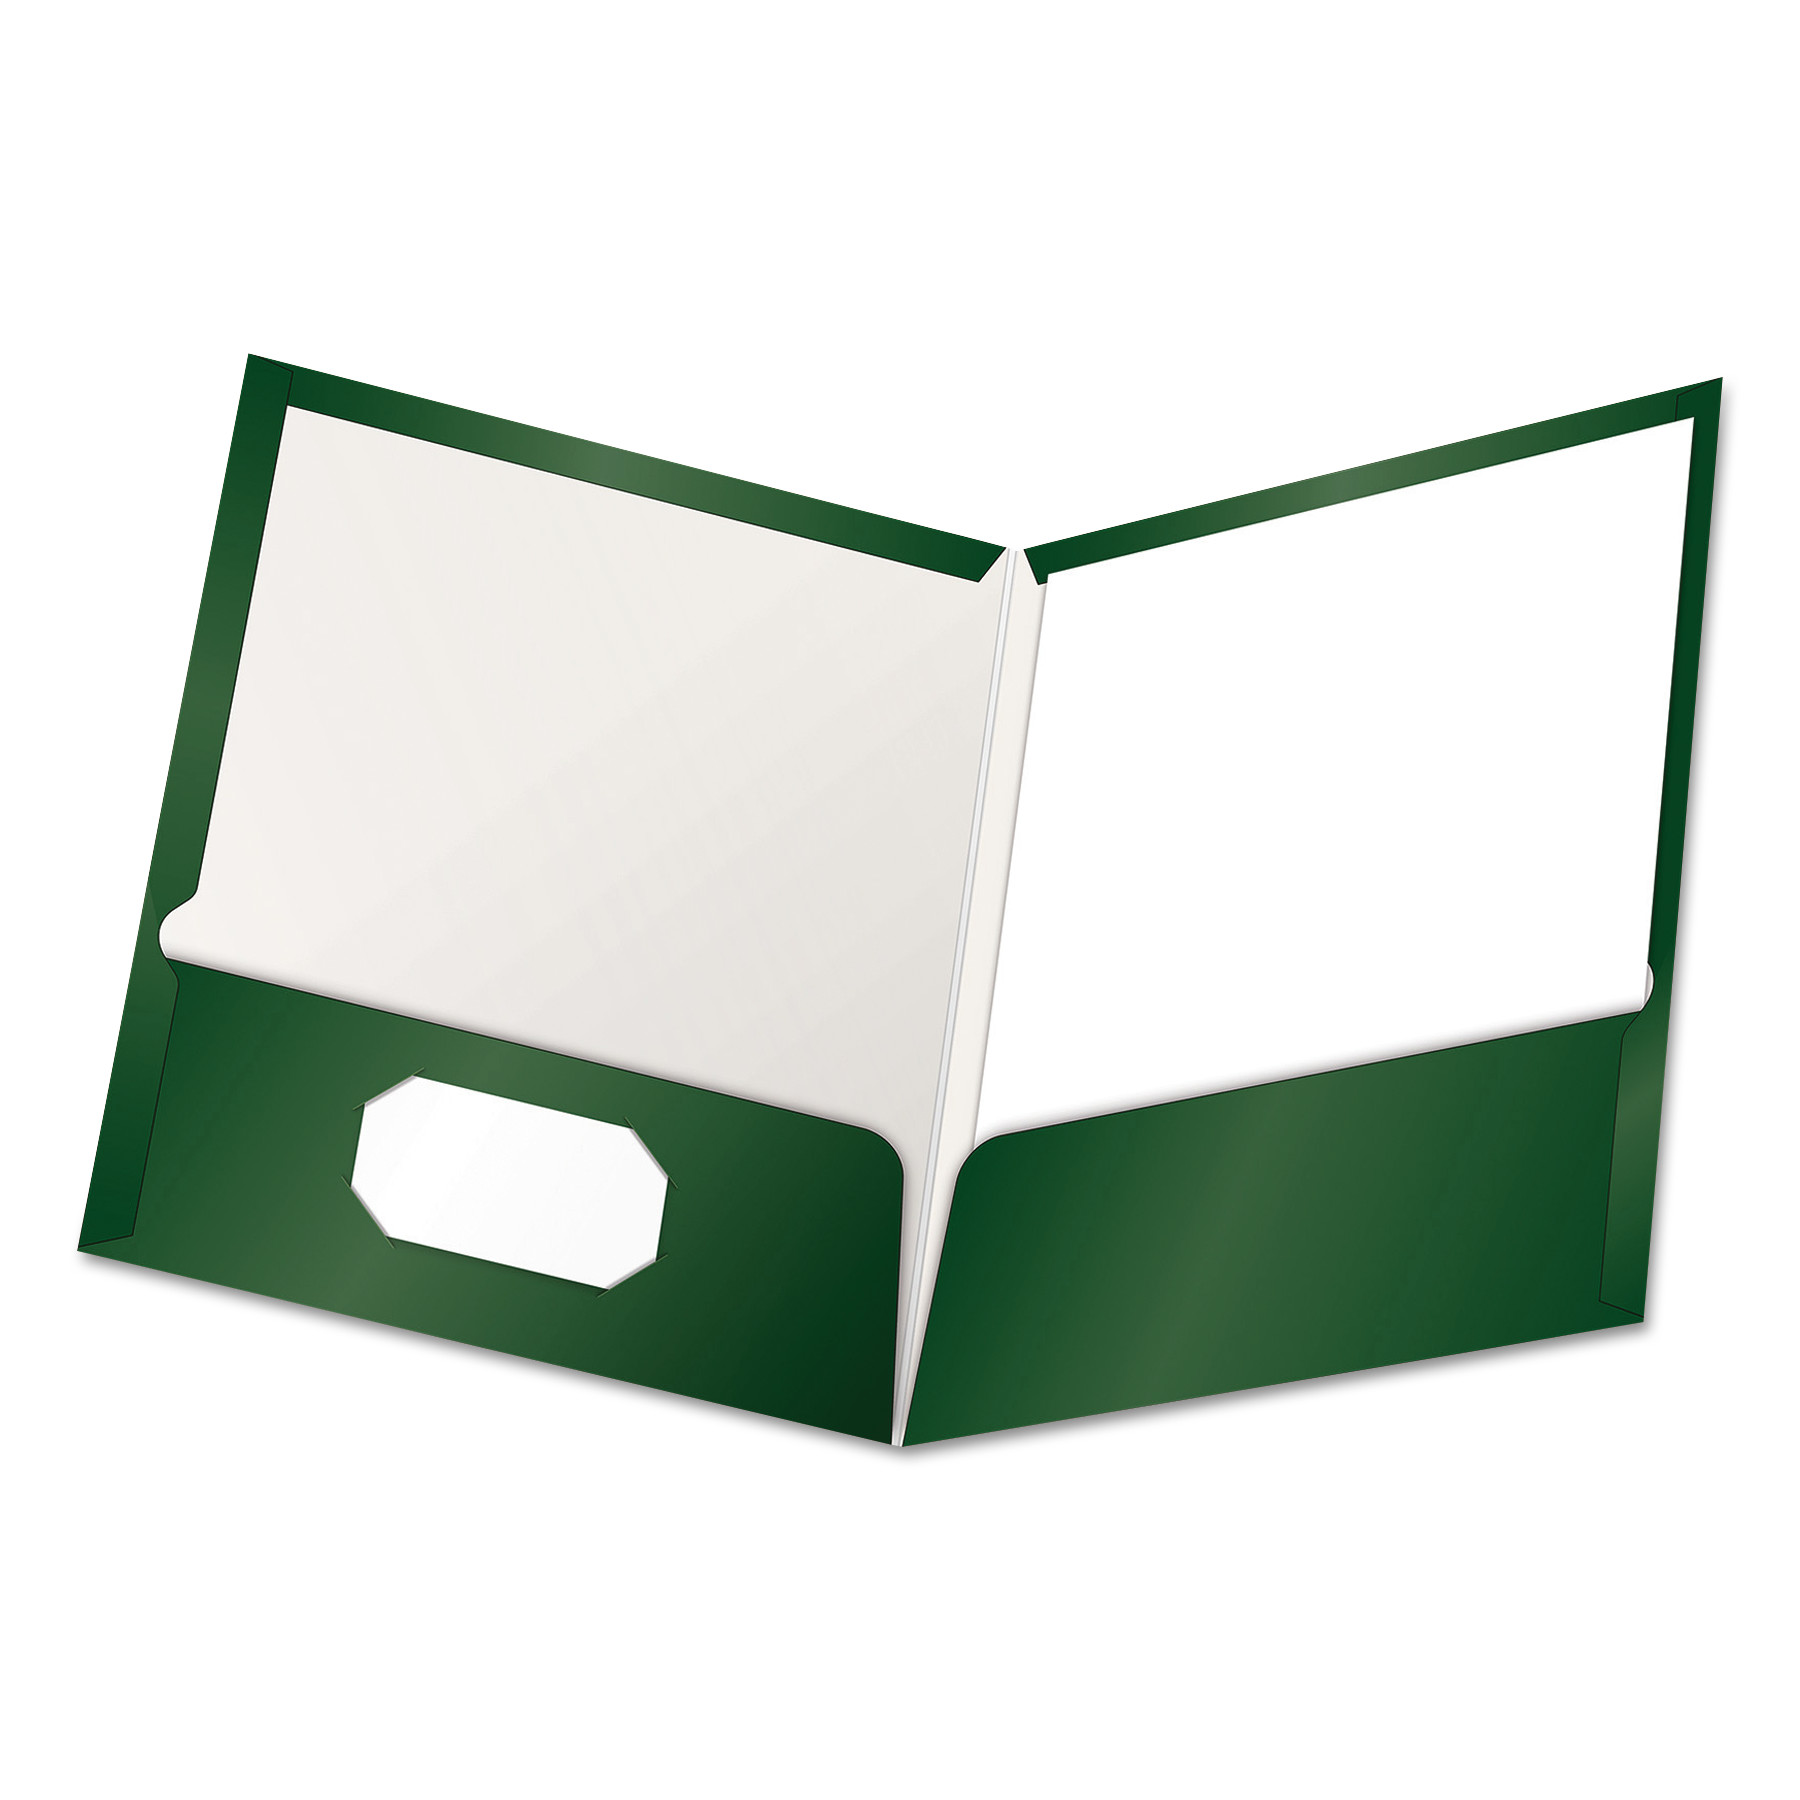  Oxford 51717 High Gloss Laminated Paperboard Folder, 100-Sheet Capacity, Green, 25/Box (OXF51717) 